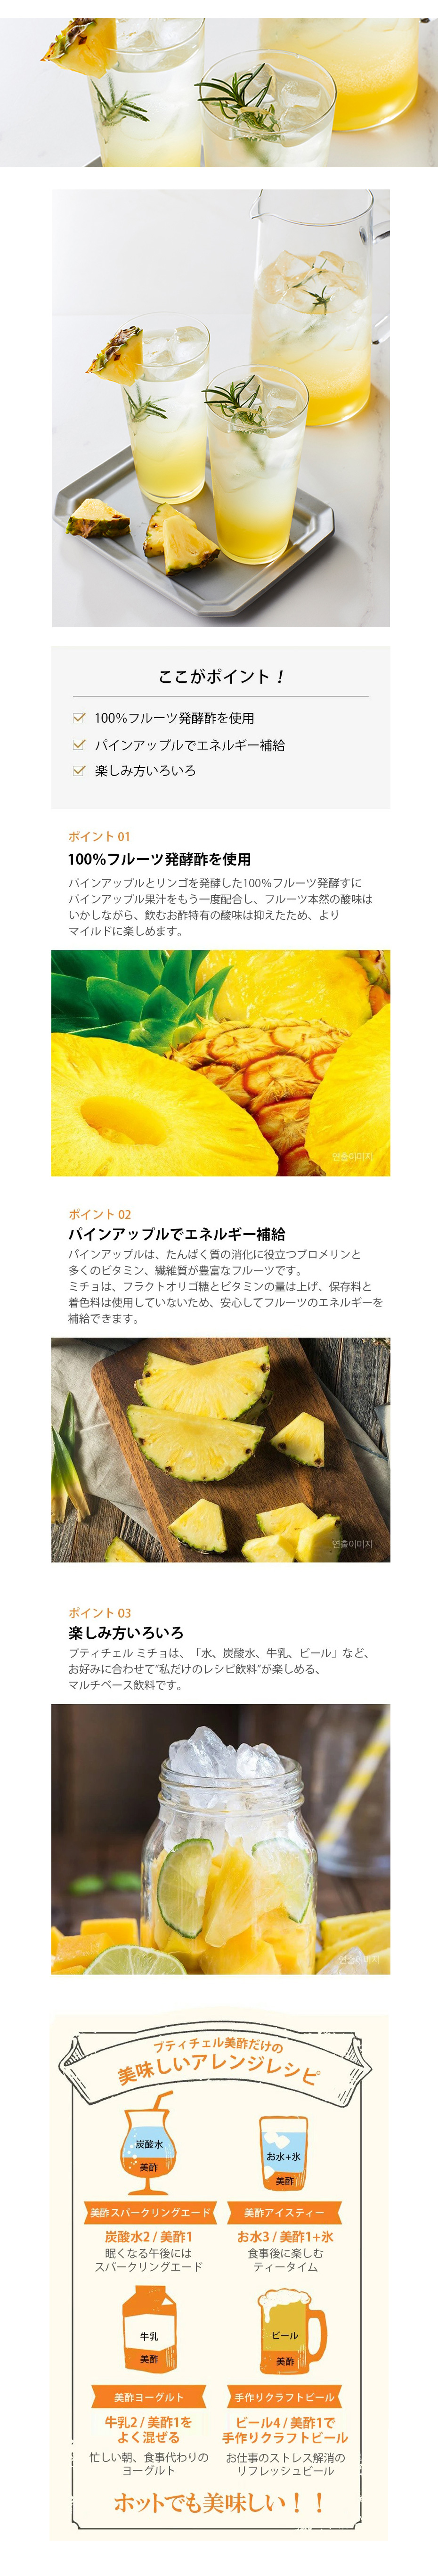 CJ プチジェル美酢 (ミチョ) パイナップル